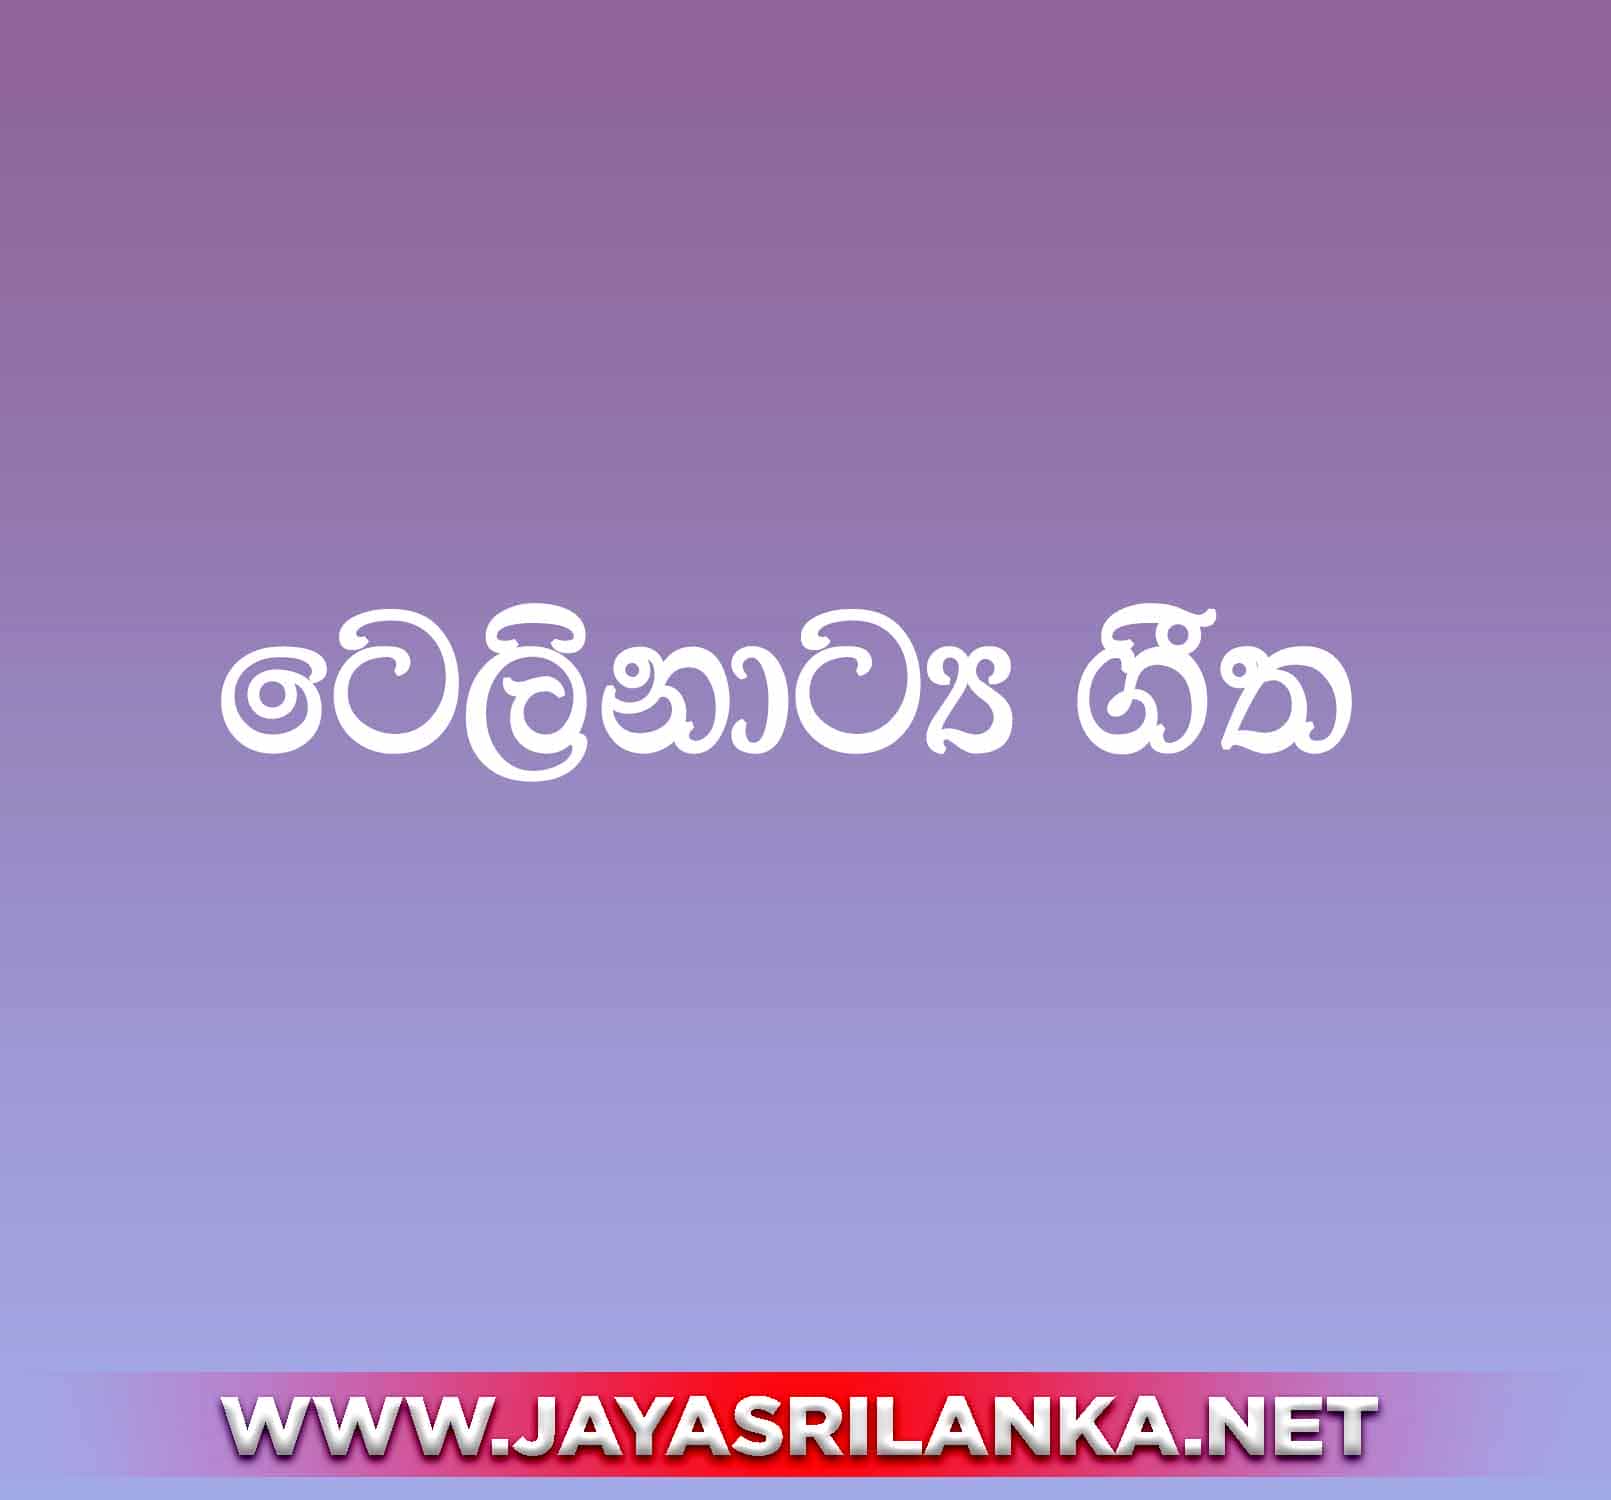 Diriya Diyani Lowa - Sinhala Teledrama Songs mp3 Image